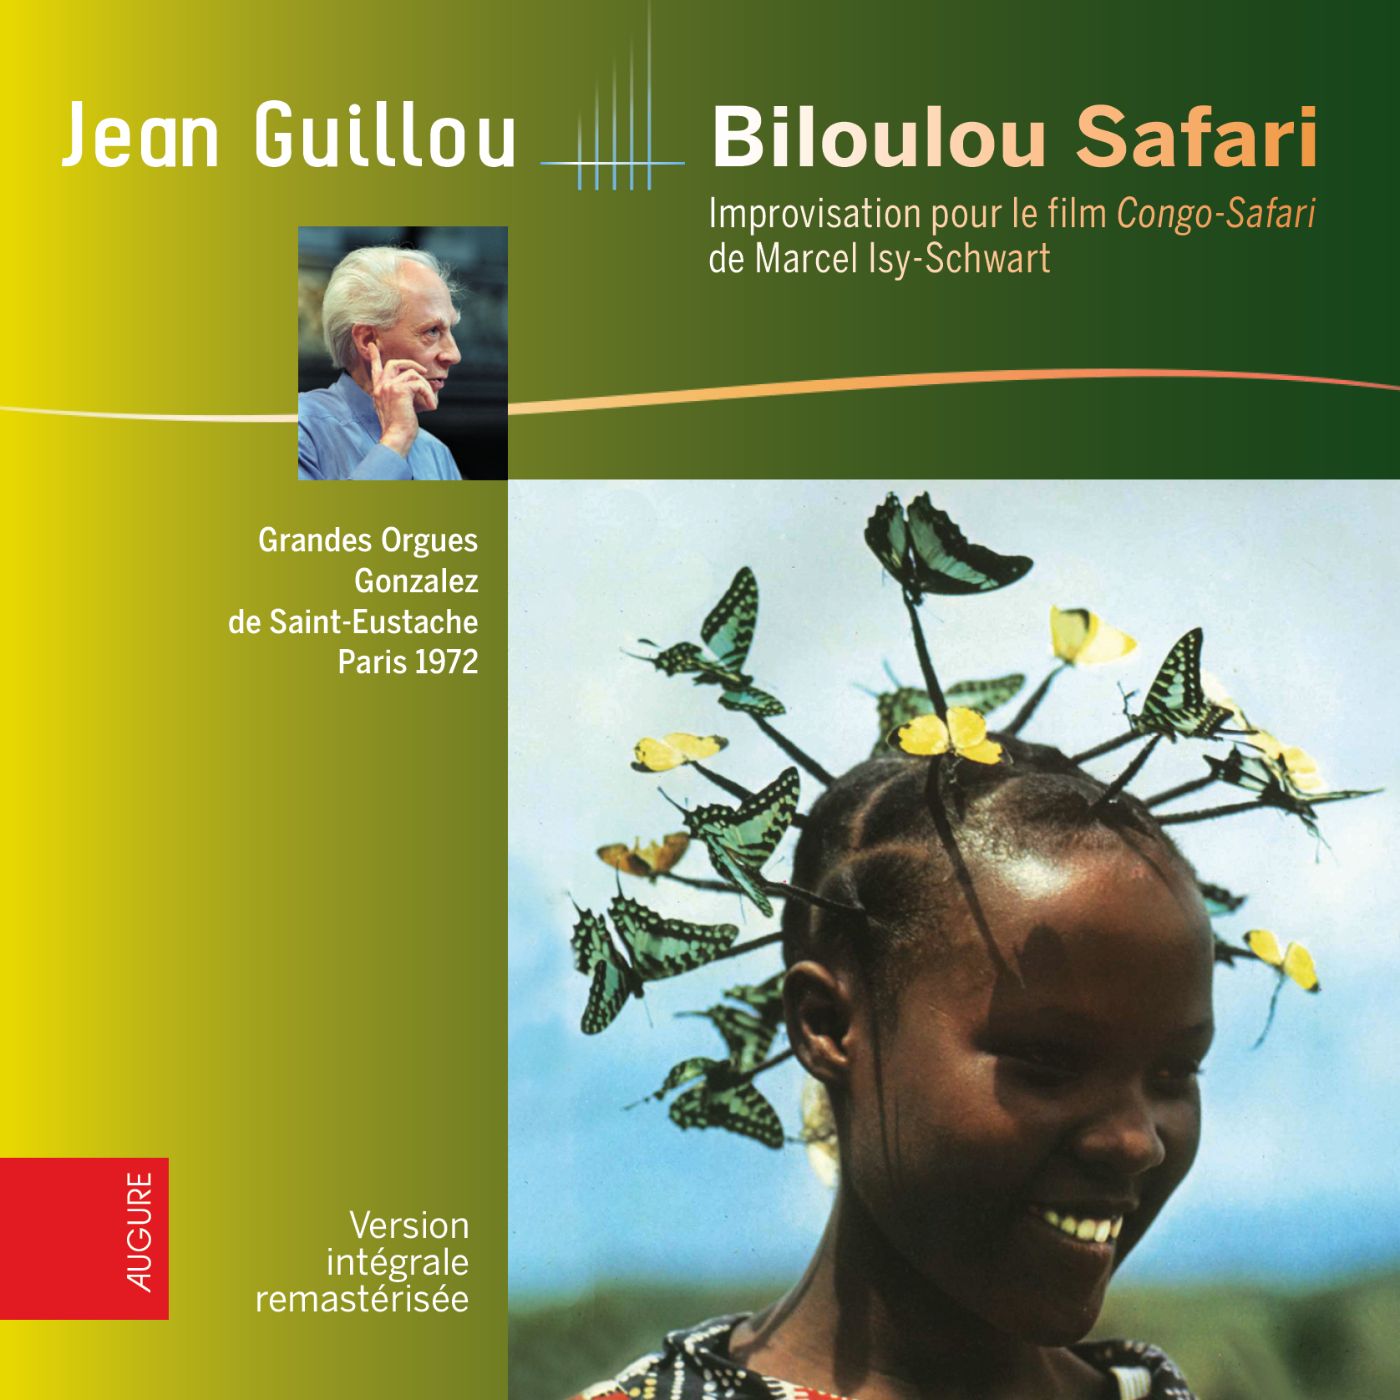 Biloulou-Safari (Improvisation pour le film Congo-Safari de Marcel Isy-Schwart)